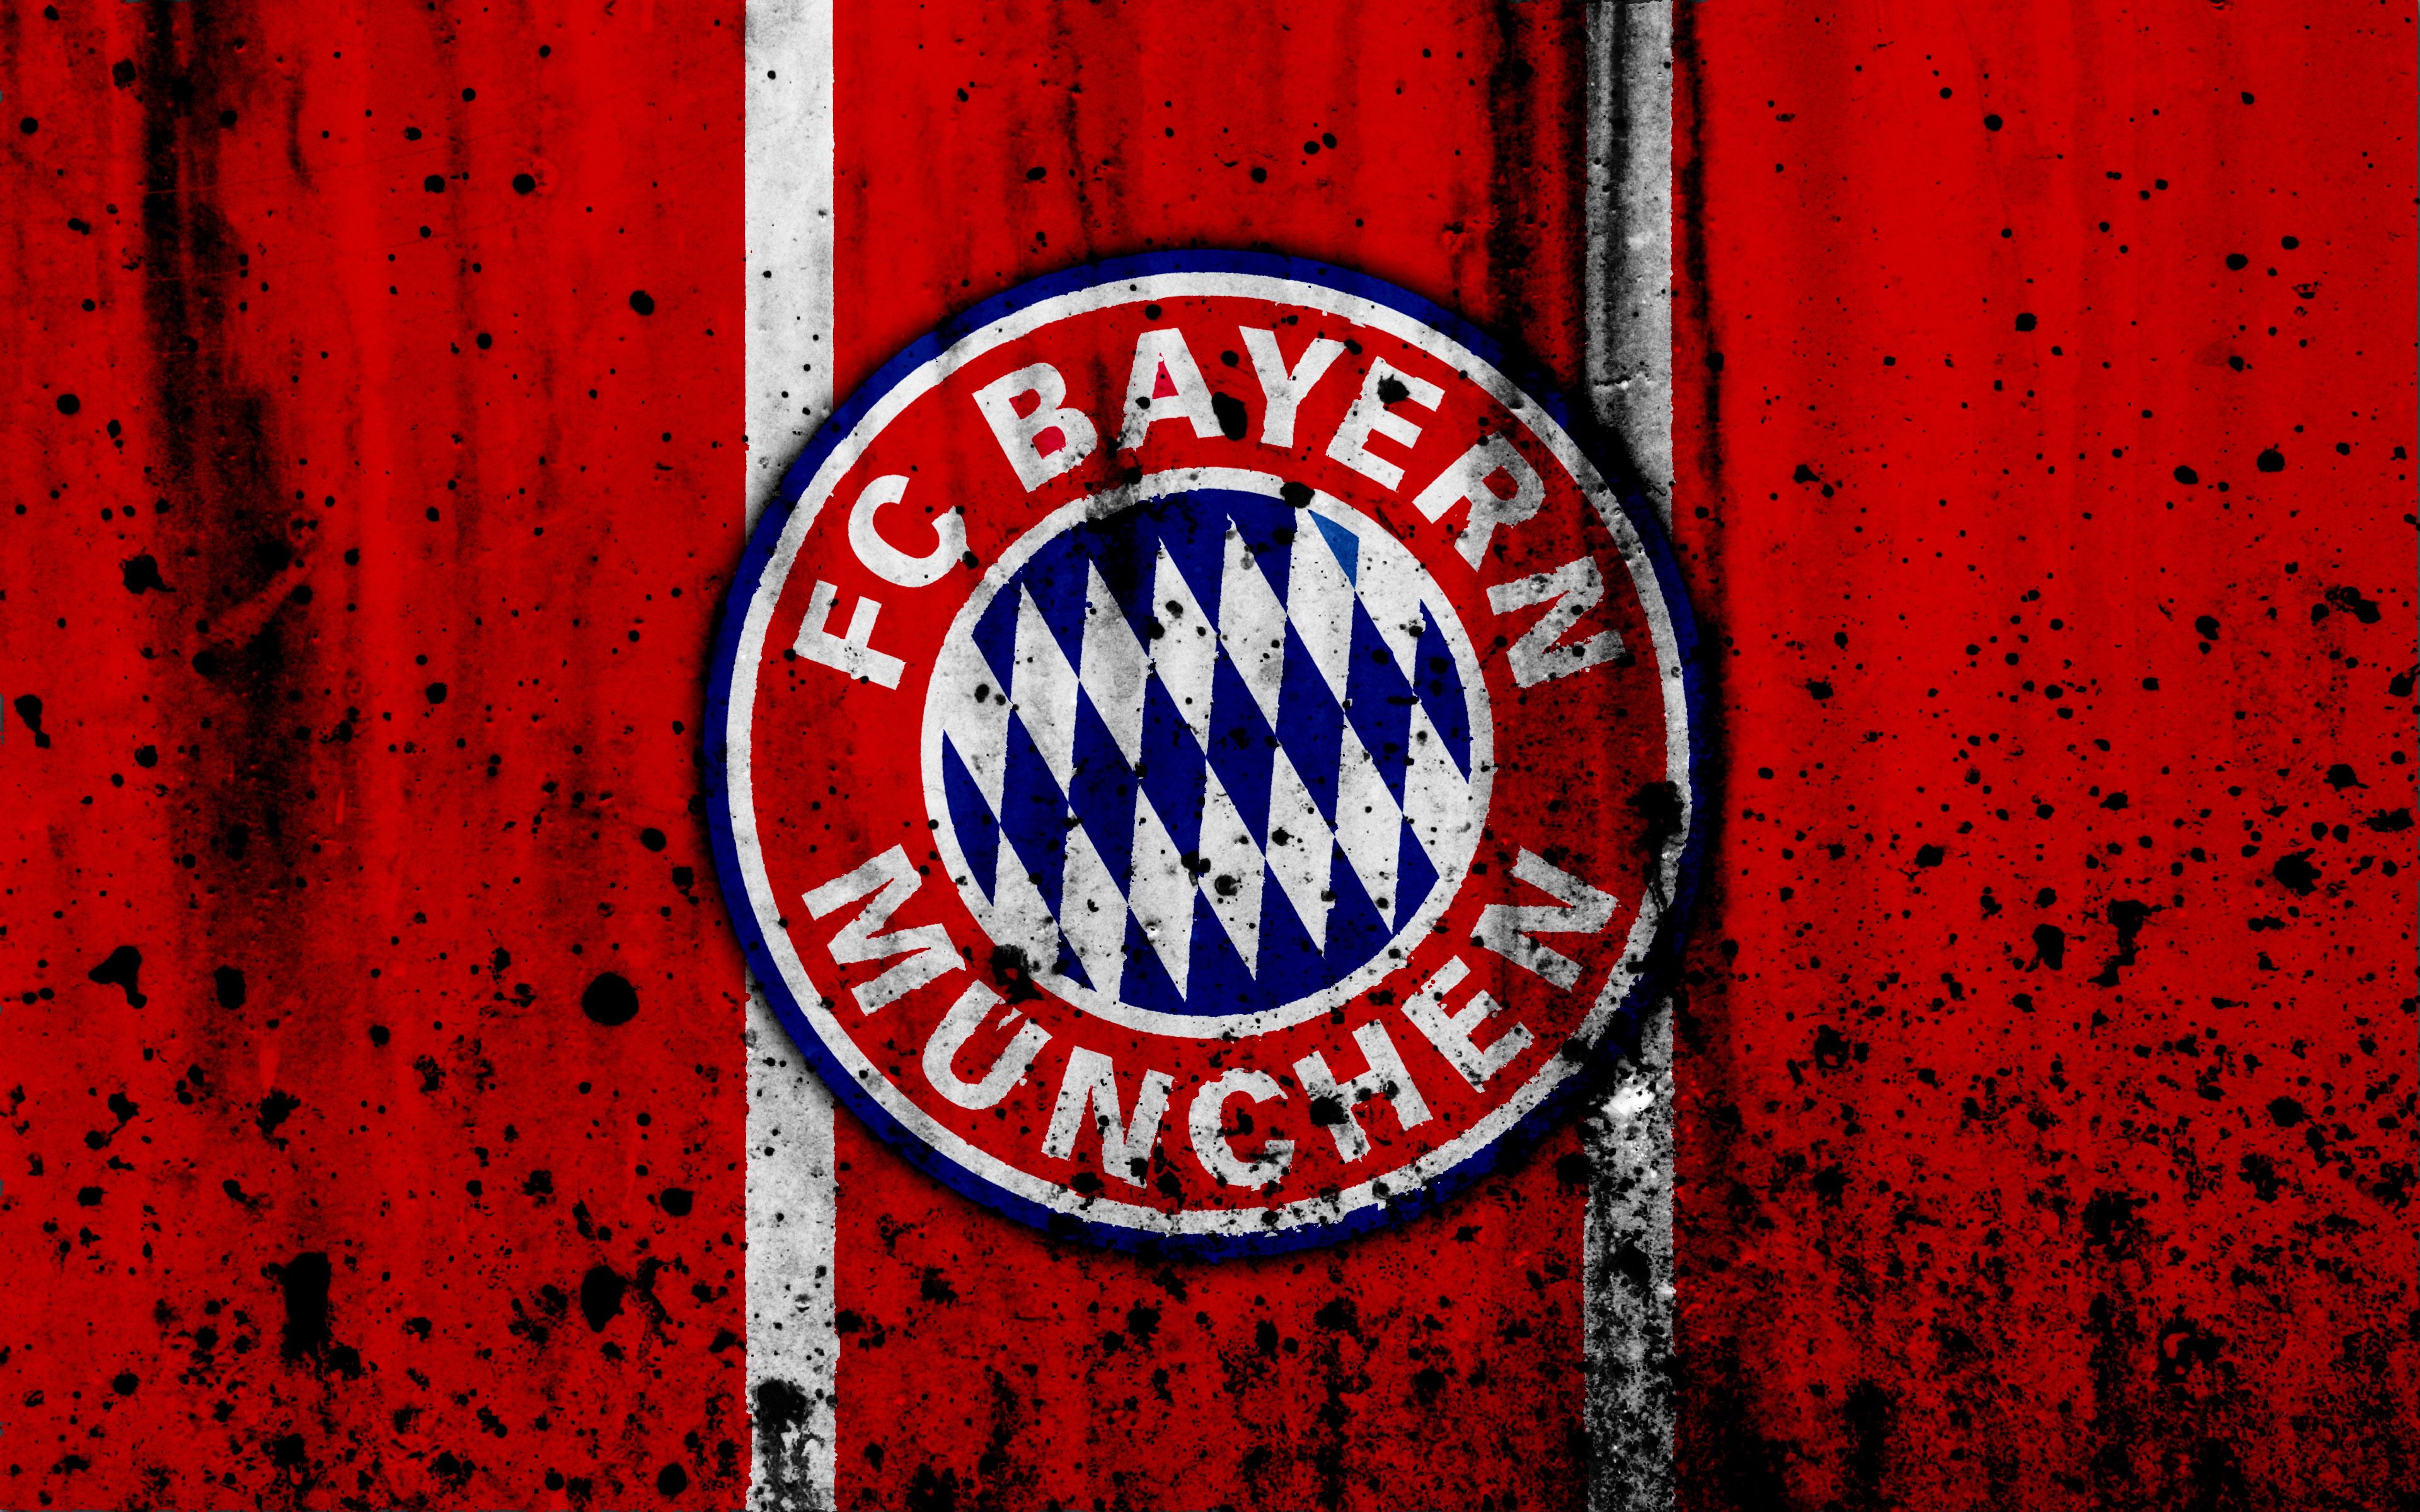 fc bayern munich, sports, emblem, logo, soccer